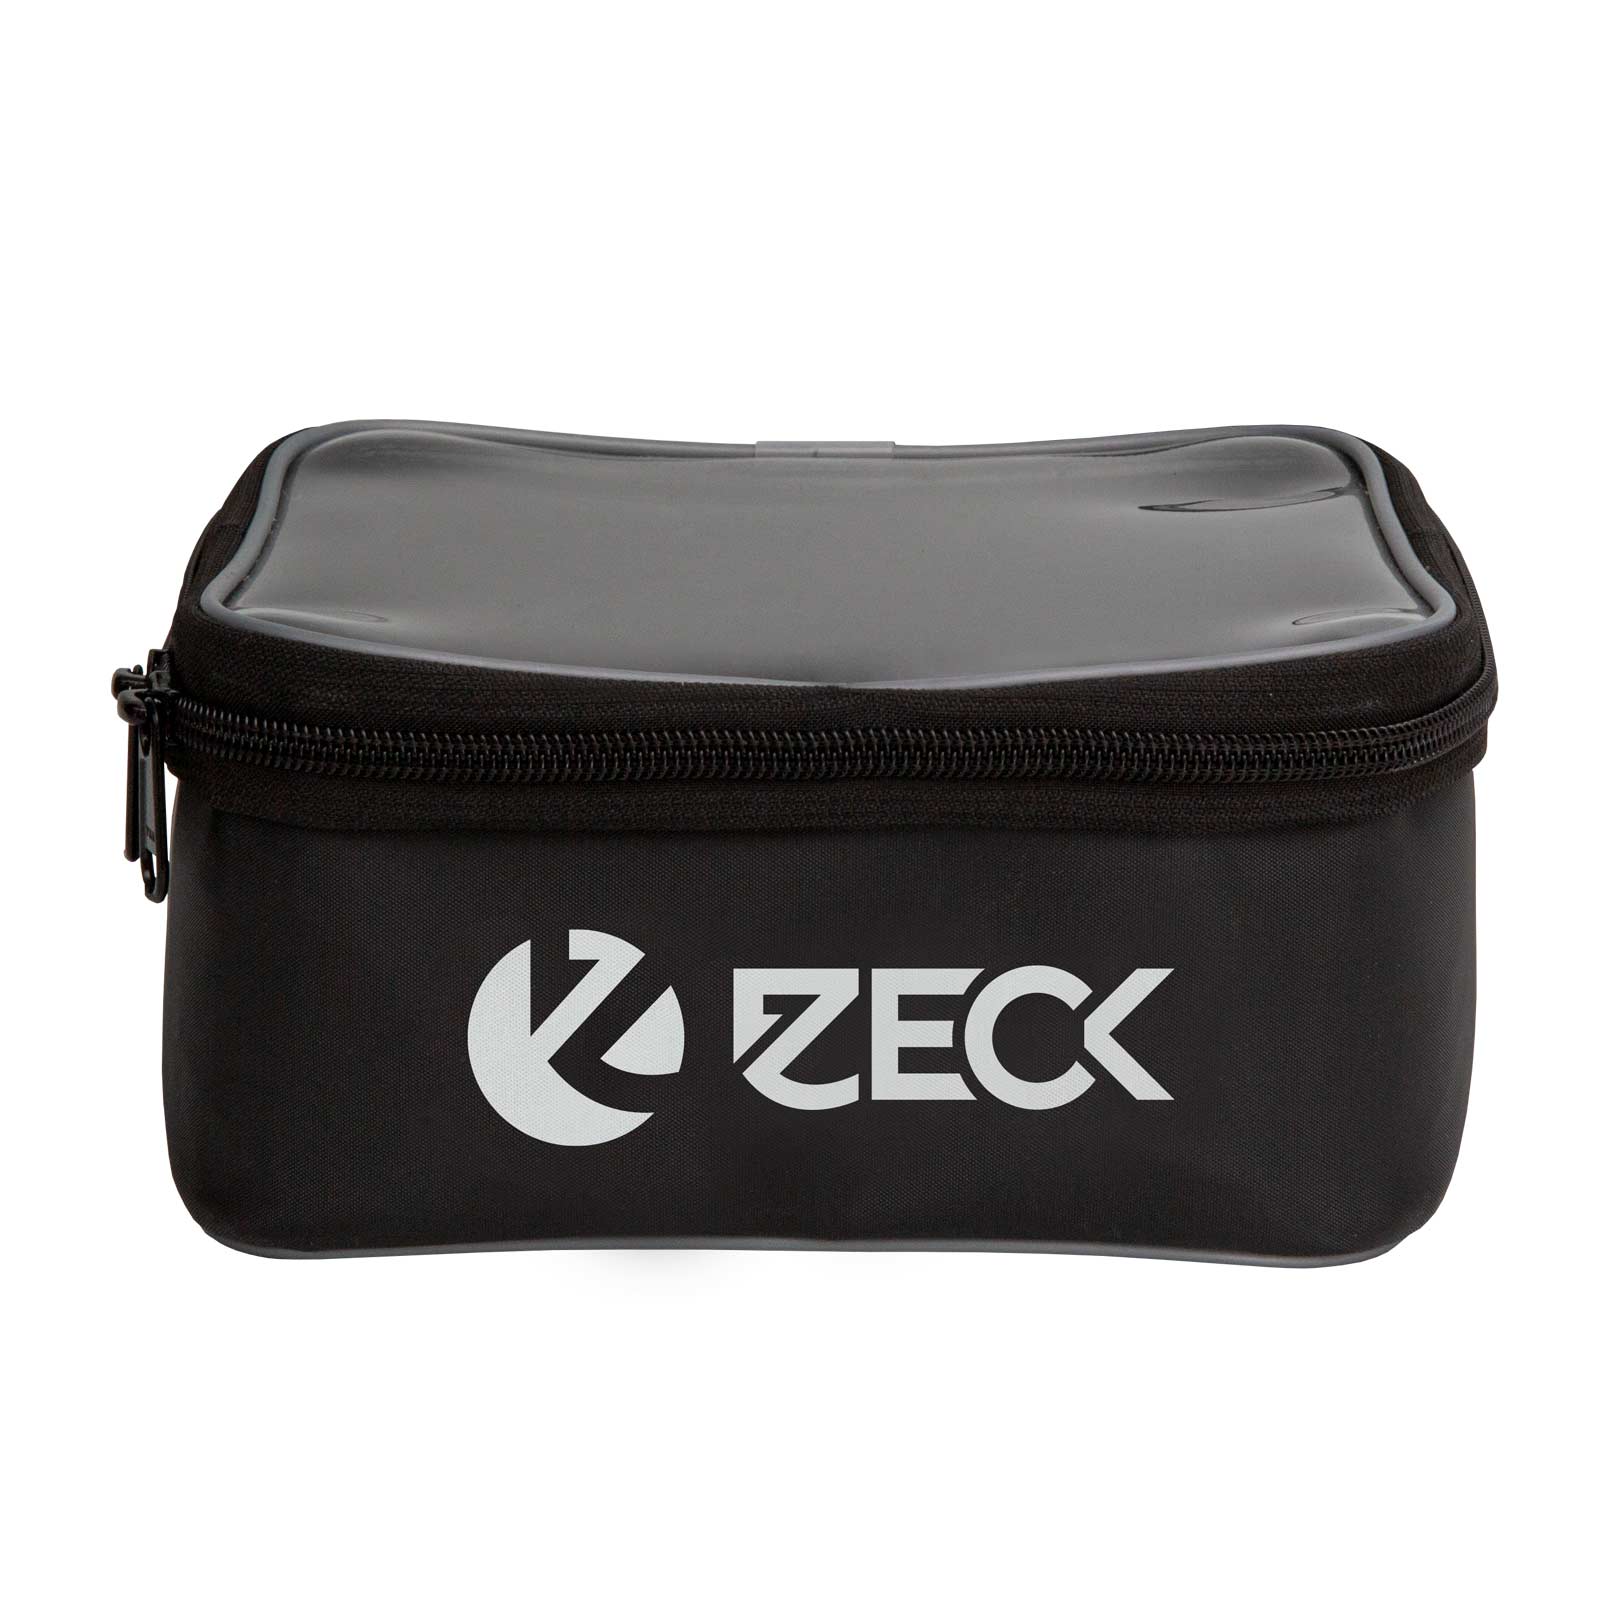 Zeck Shoulder Bag S Angeltasche 32x22x19cm Tackletasche Kunstködertasche 